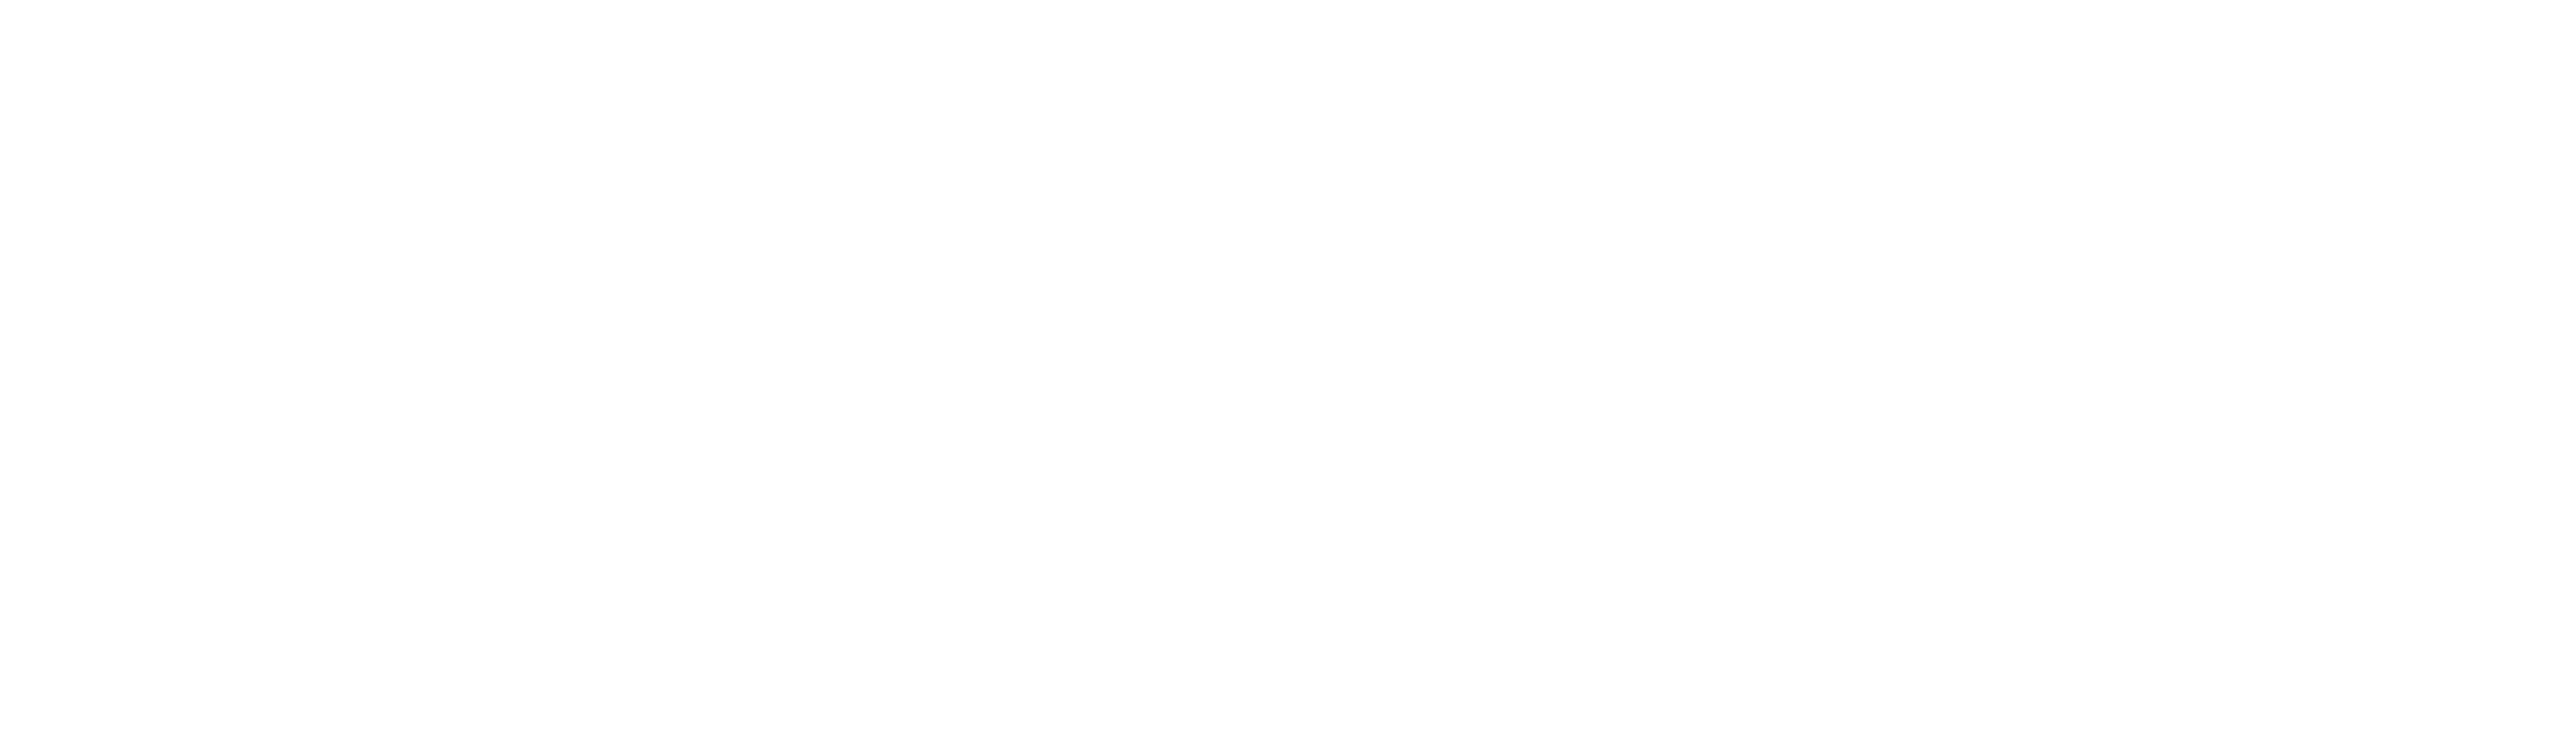 Glowbit Logo